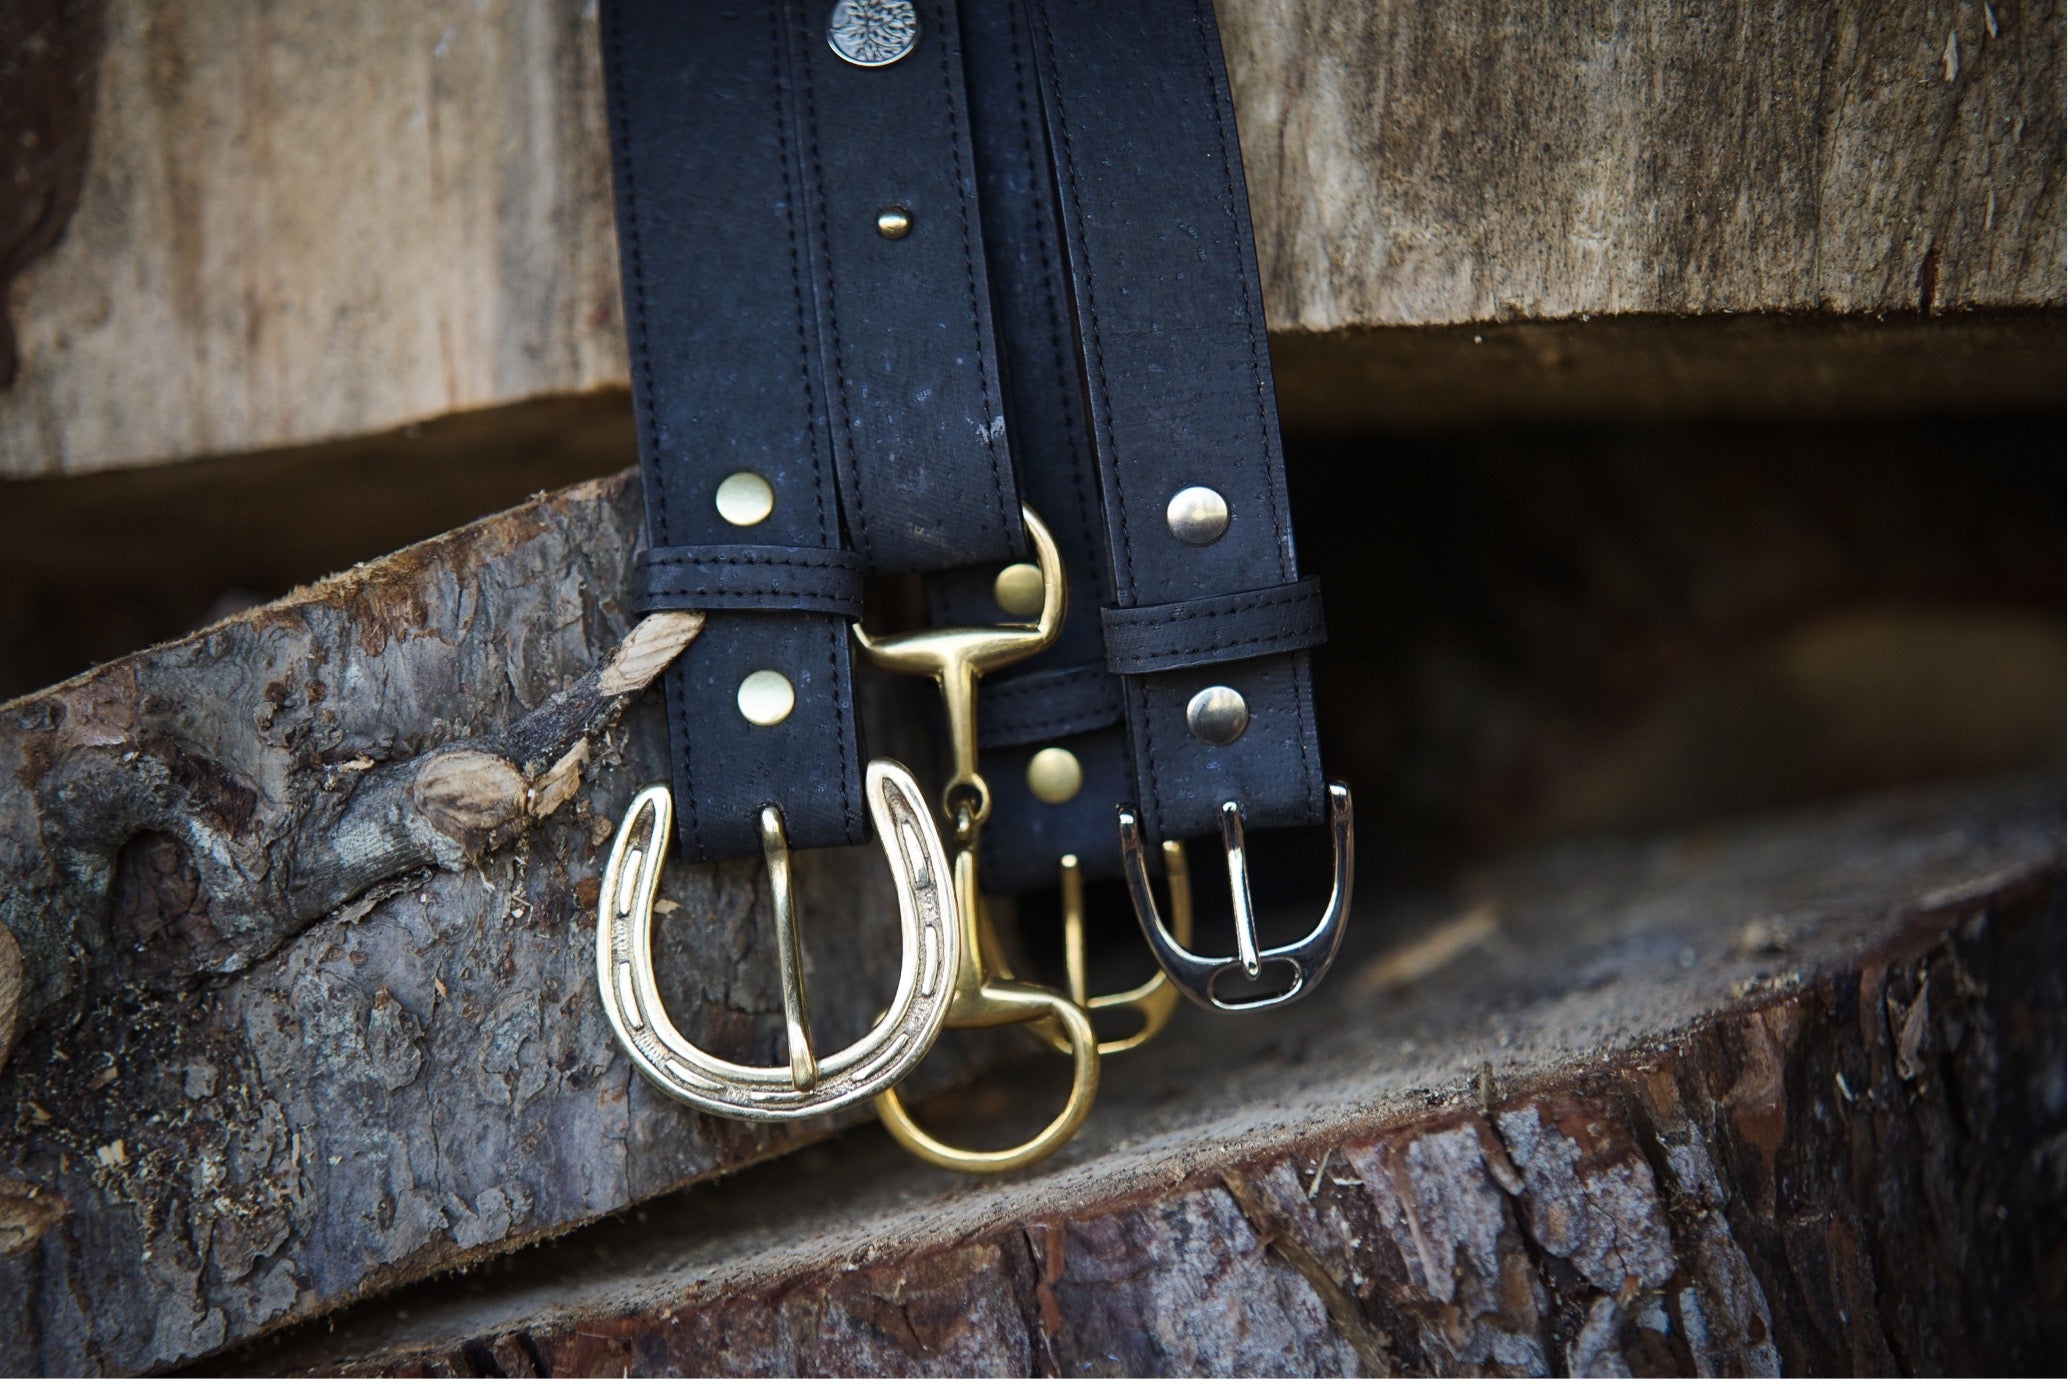 Equestrian themed belt range displayed hanging off a wooden stump